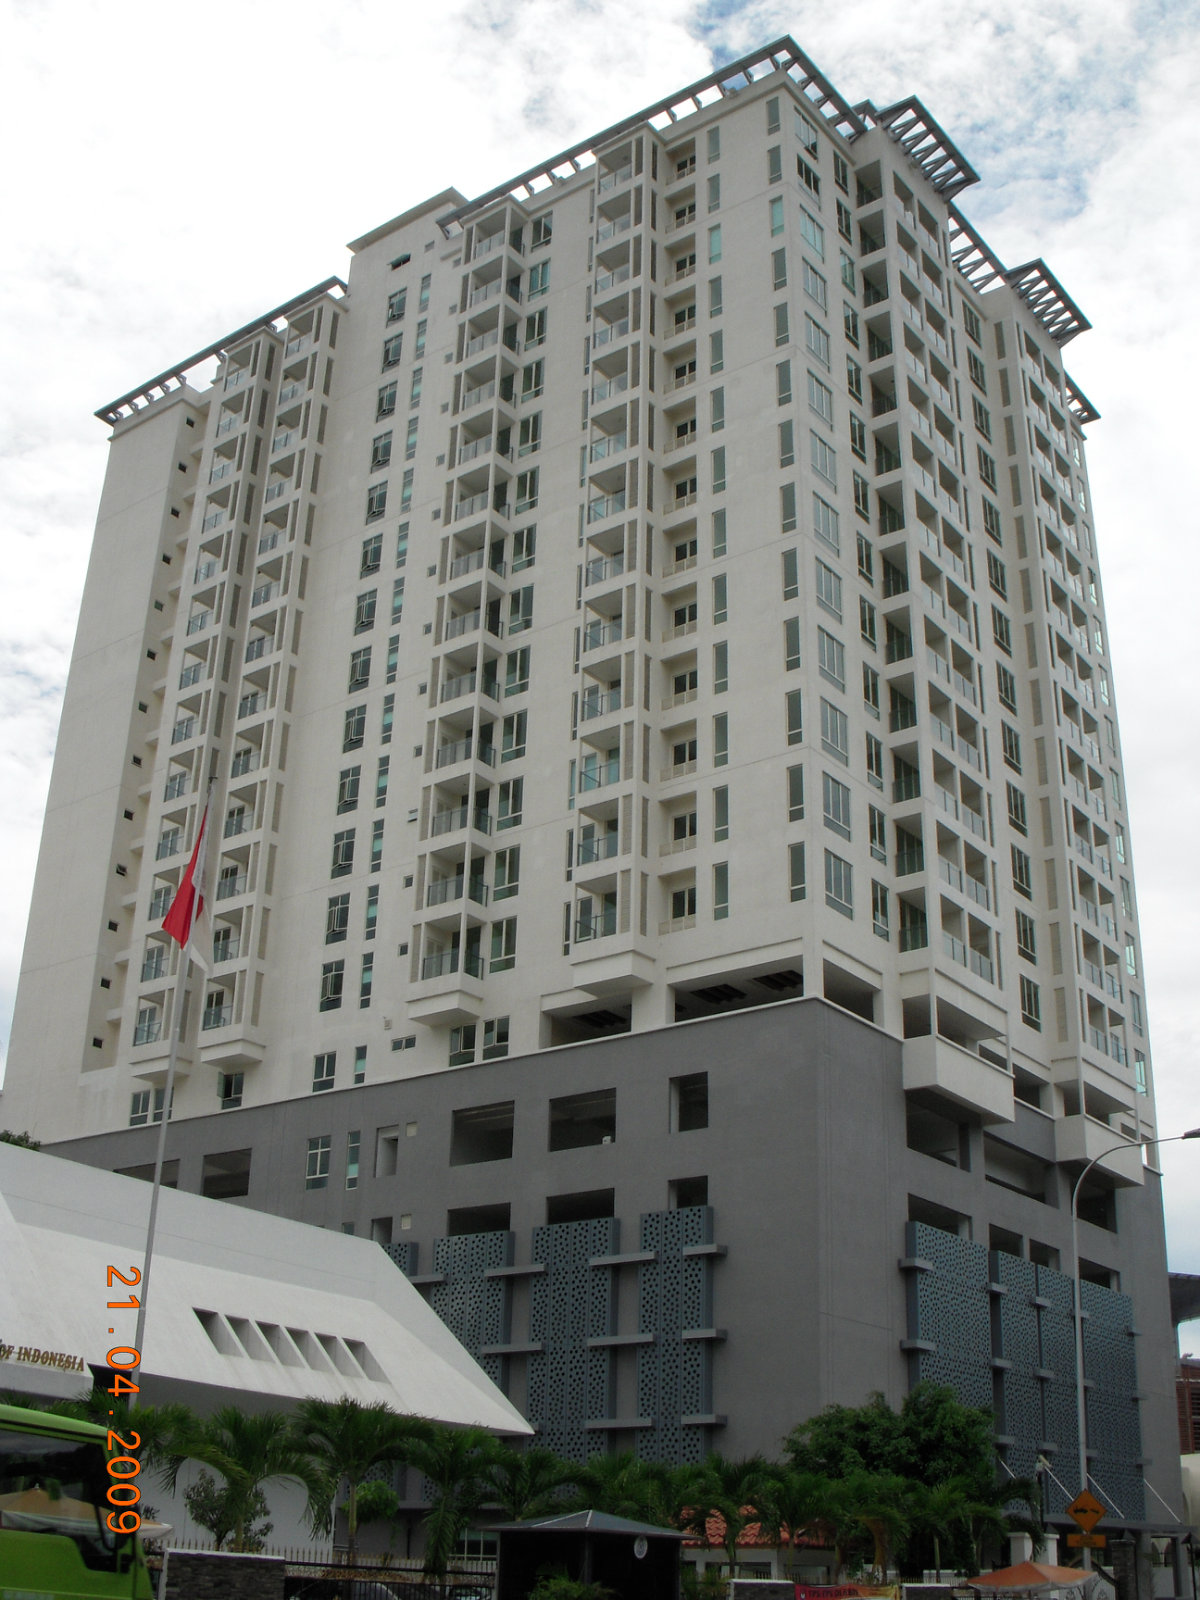 General View Urban Delta Sdn Bhd, Jalan Tun Razak,Kuala Lump